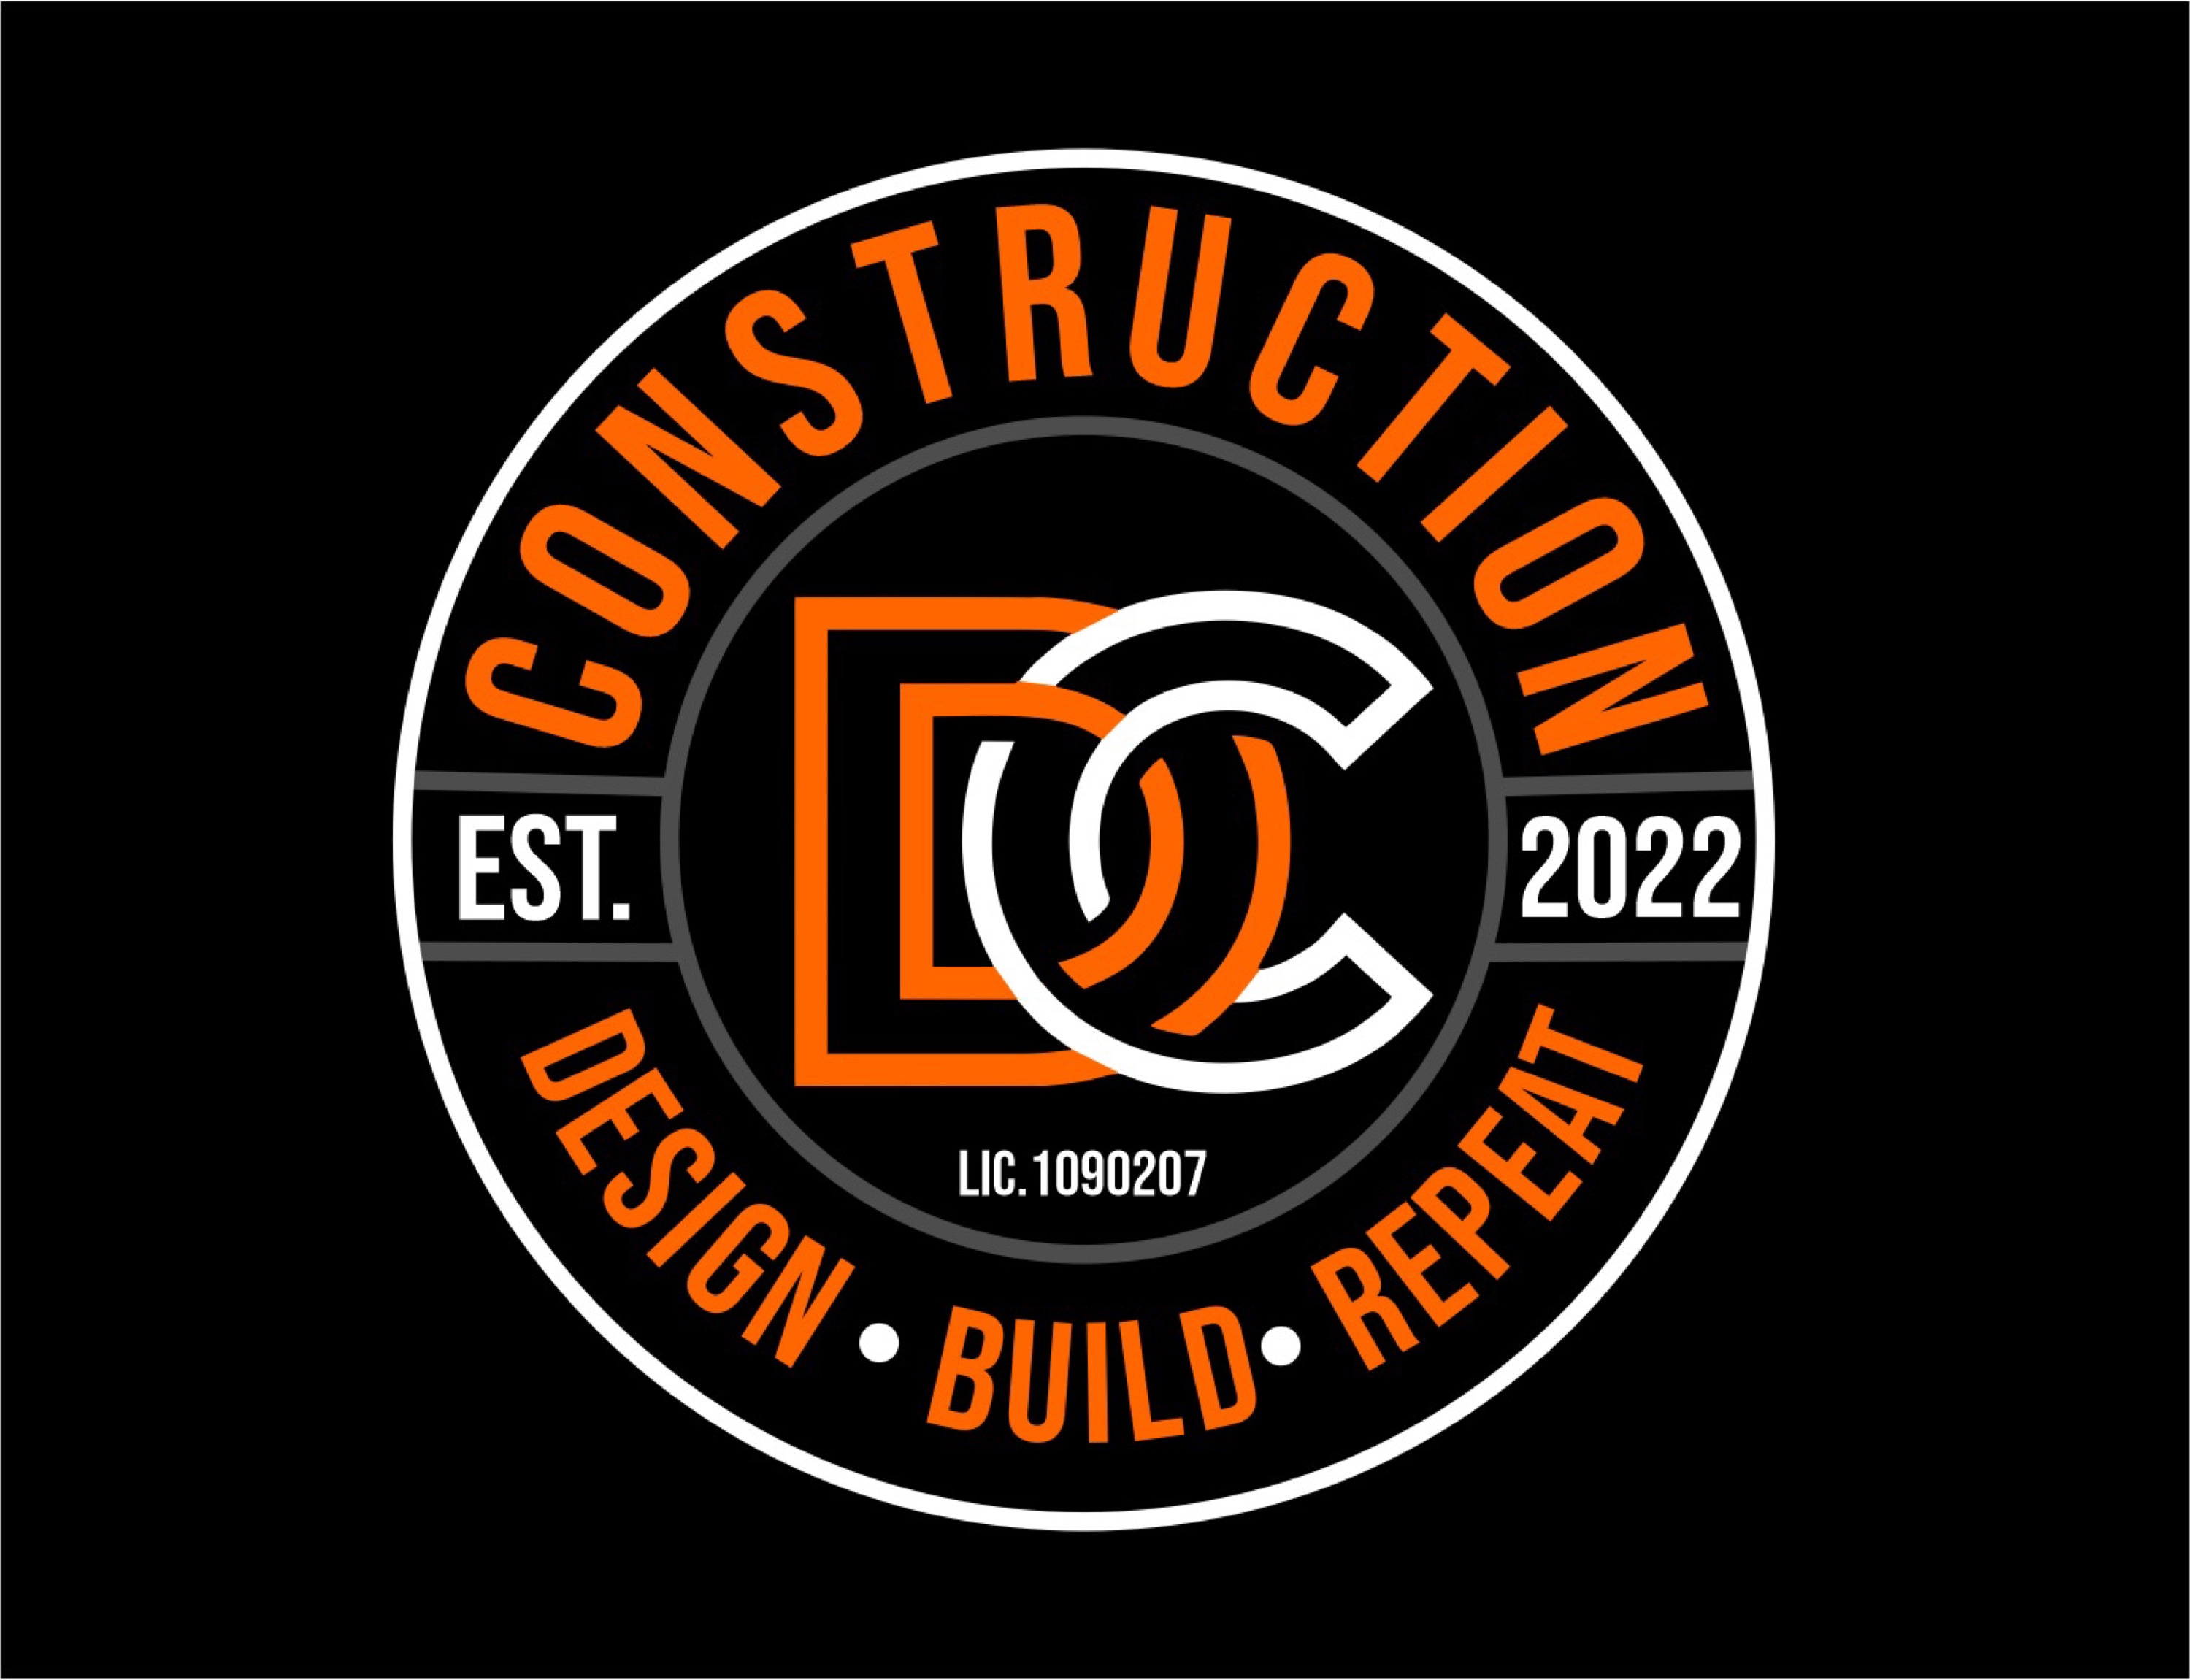 DC Construction Logo